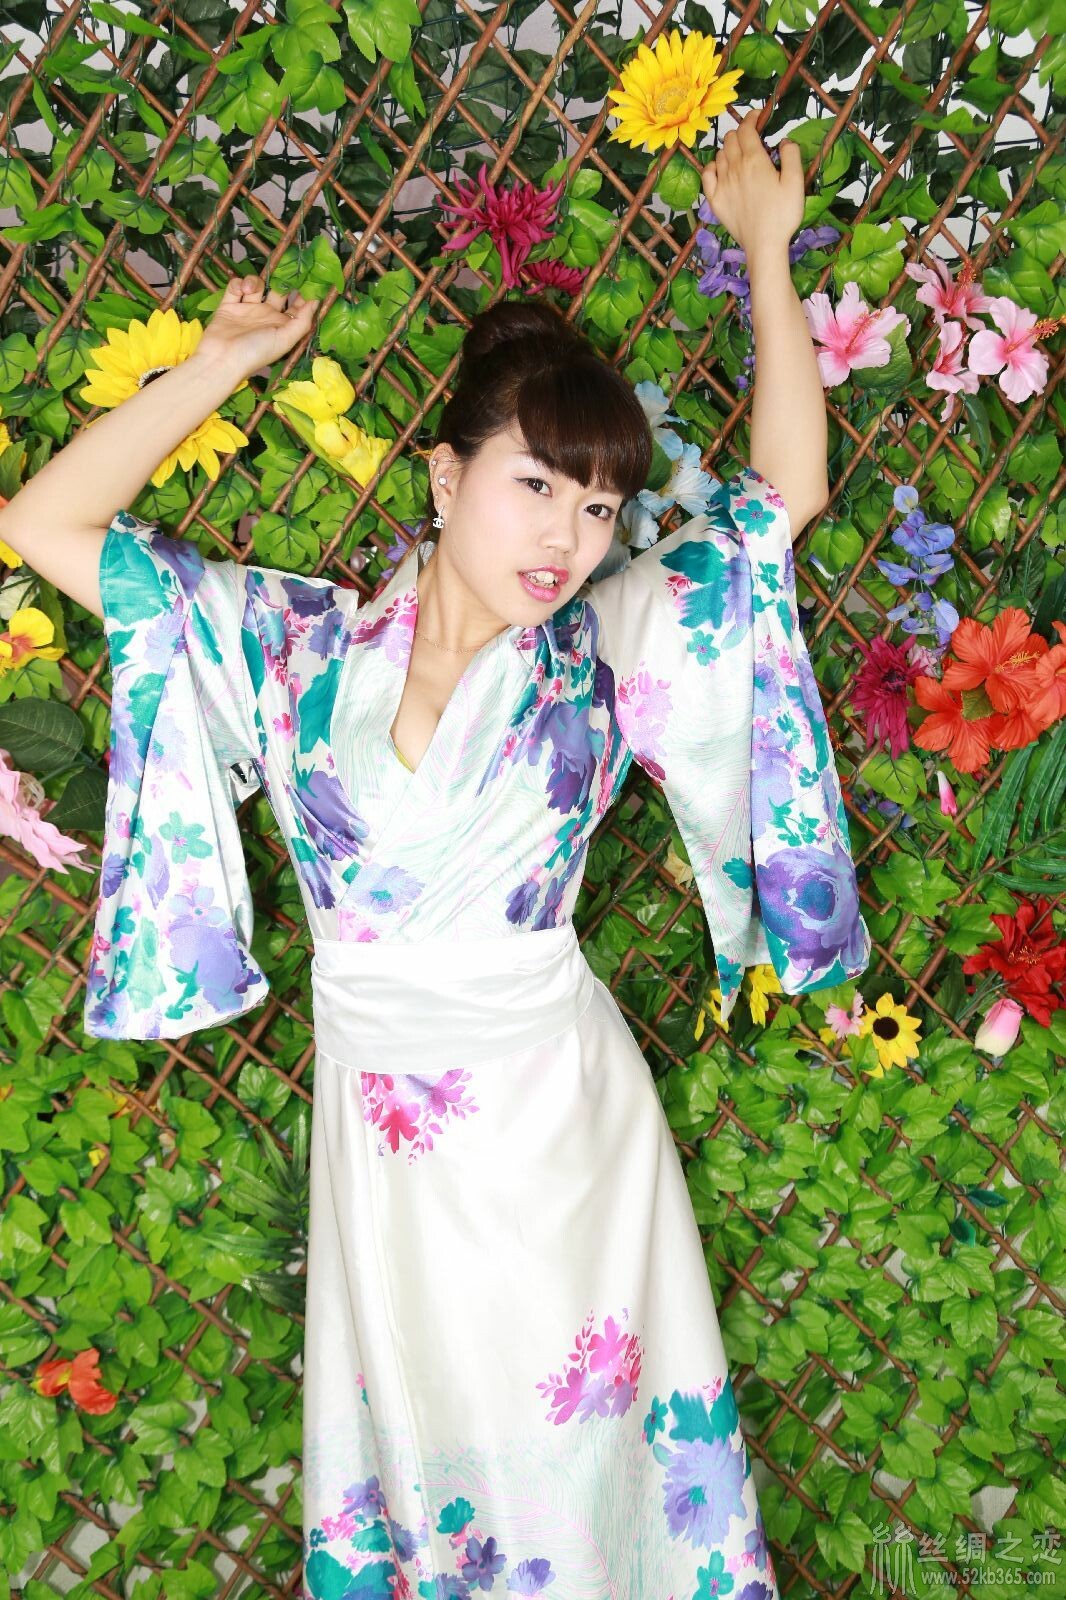 52kb 丝绸和服 seina-kimono-27.jpg  丝绸物品爱好者 234105oomz4npdinp2jovl